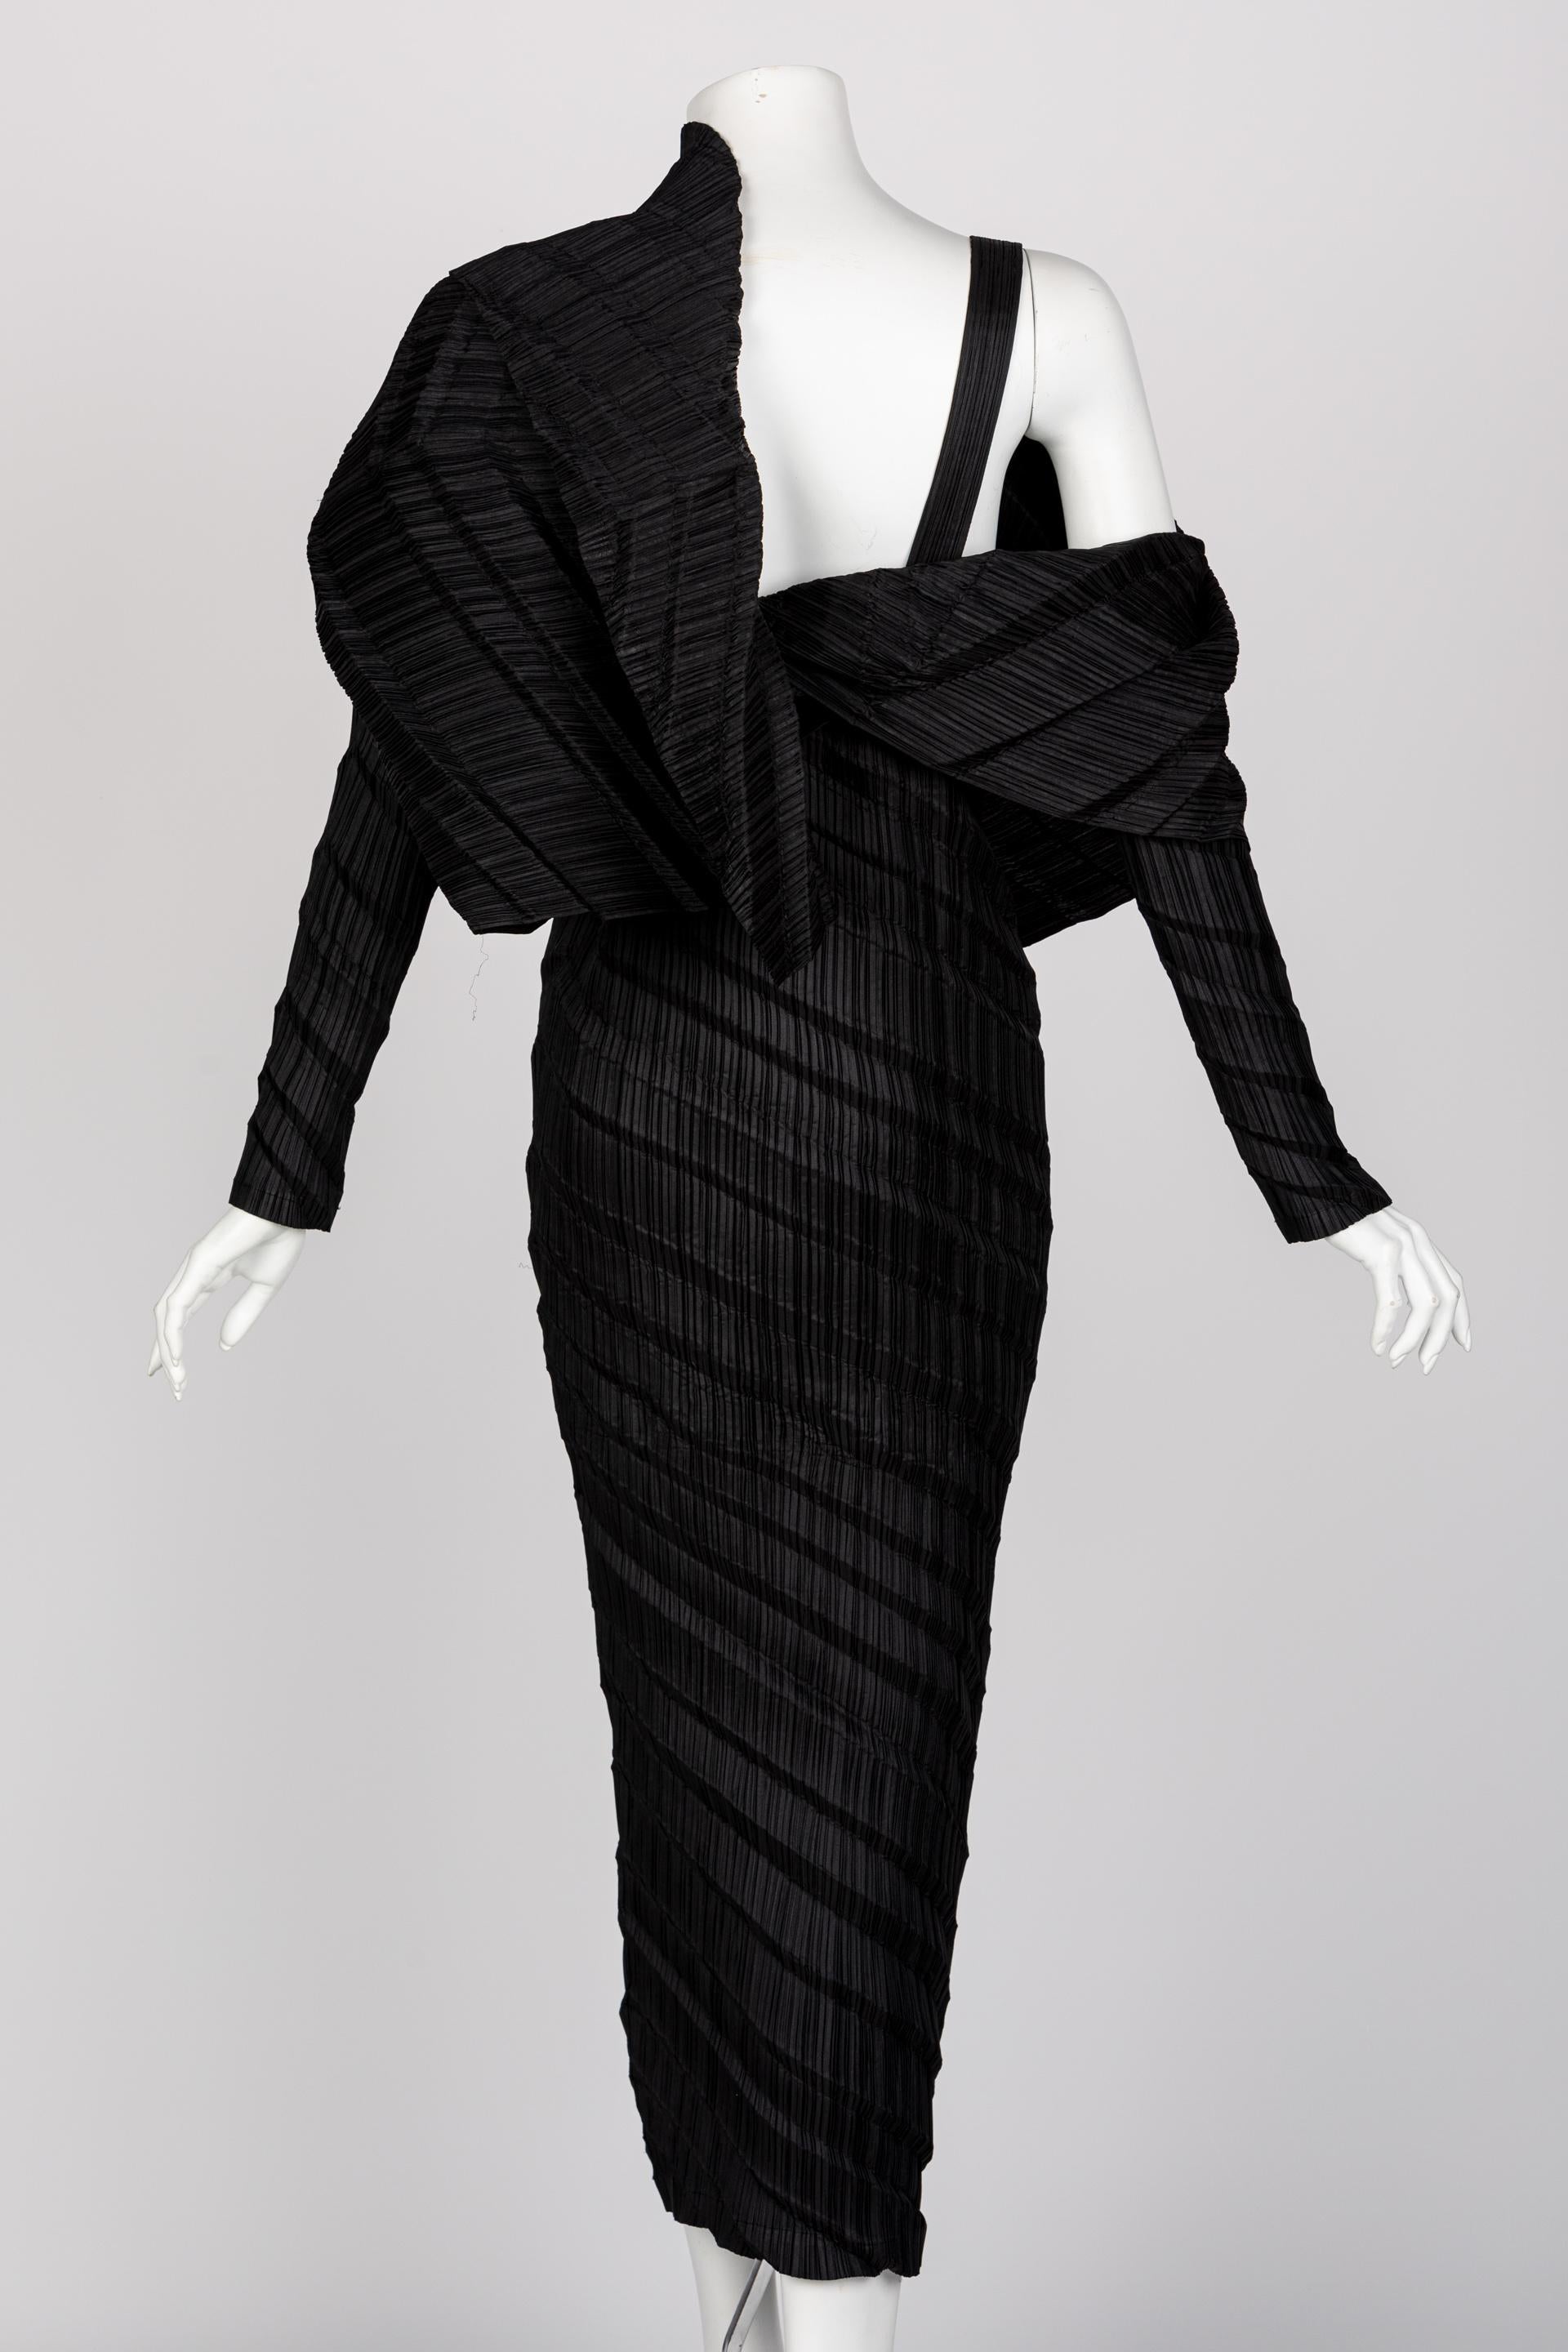 Issey Miyake Black Pleated Sculptural Dress, 1990s 3